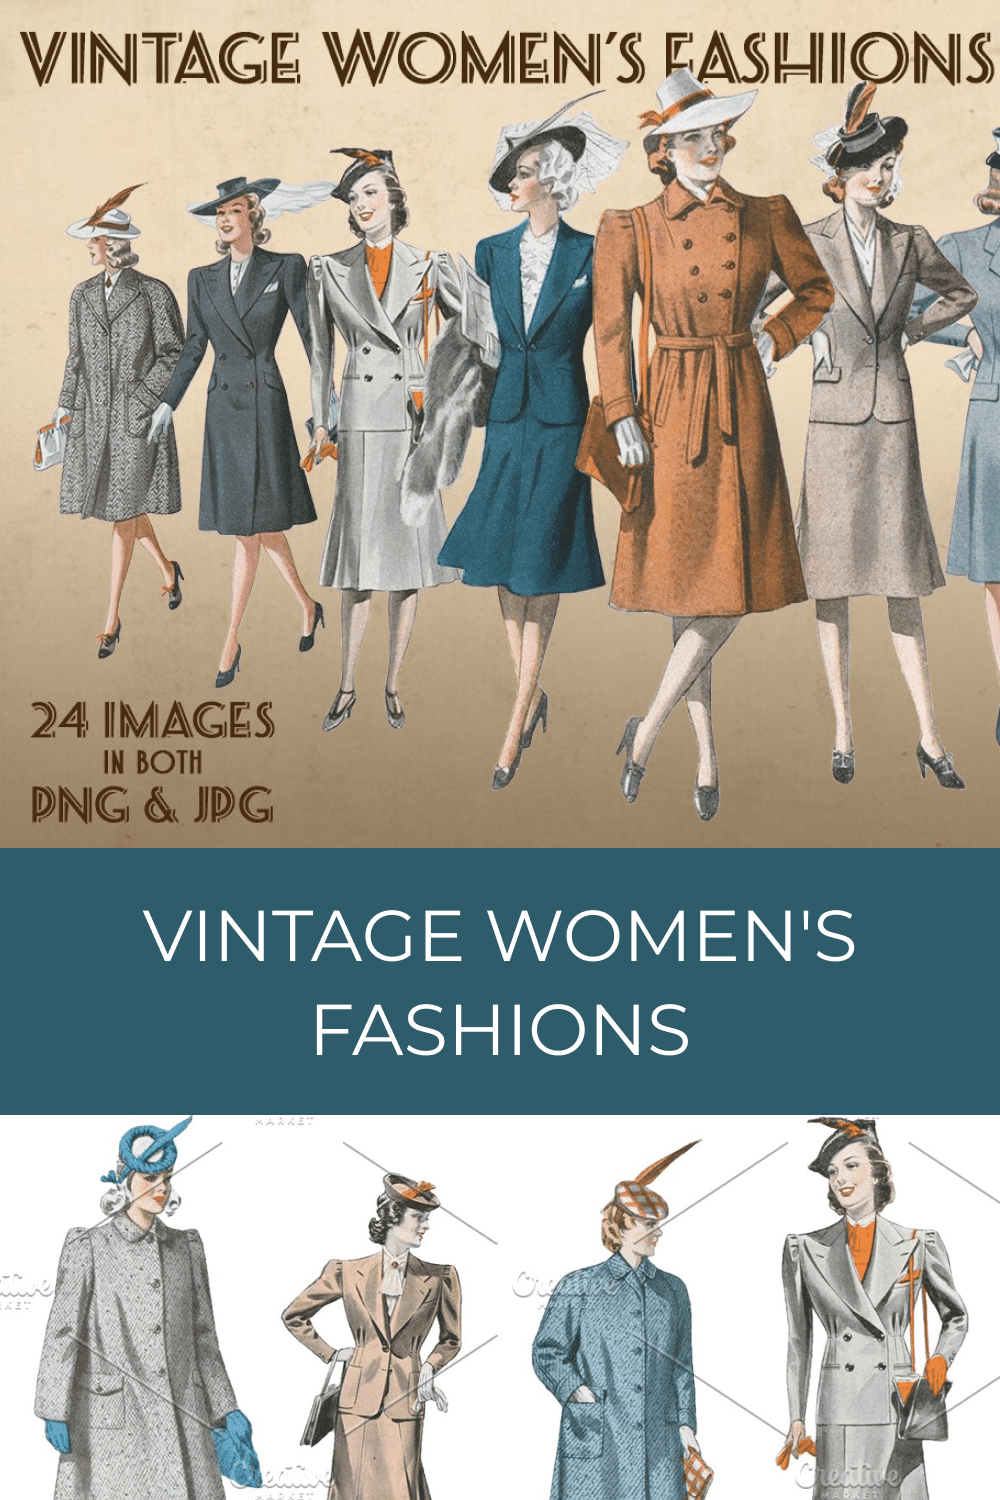 vintage womens fashions pinterest image.